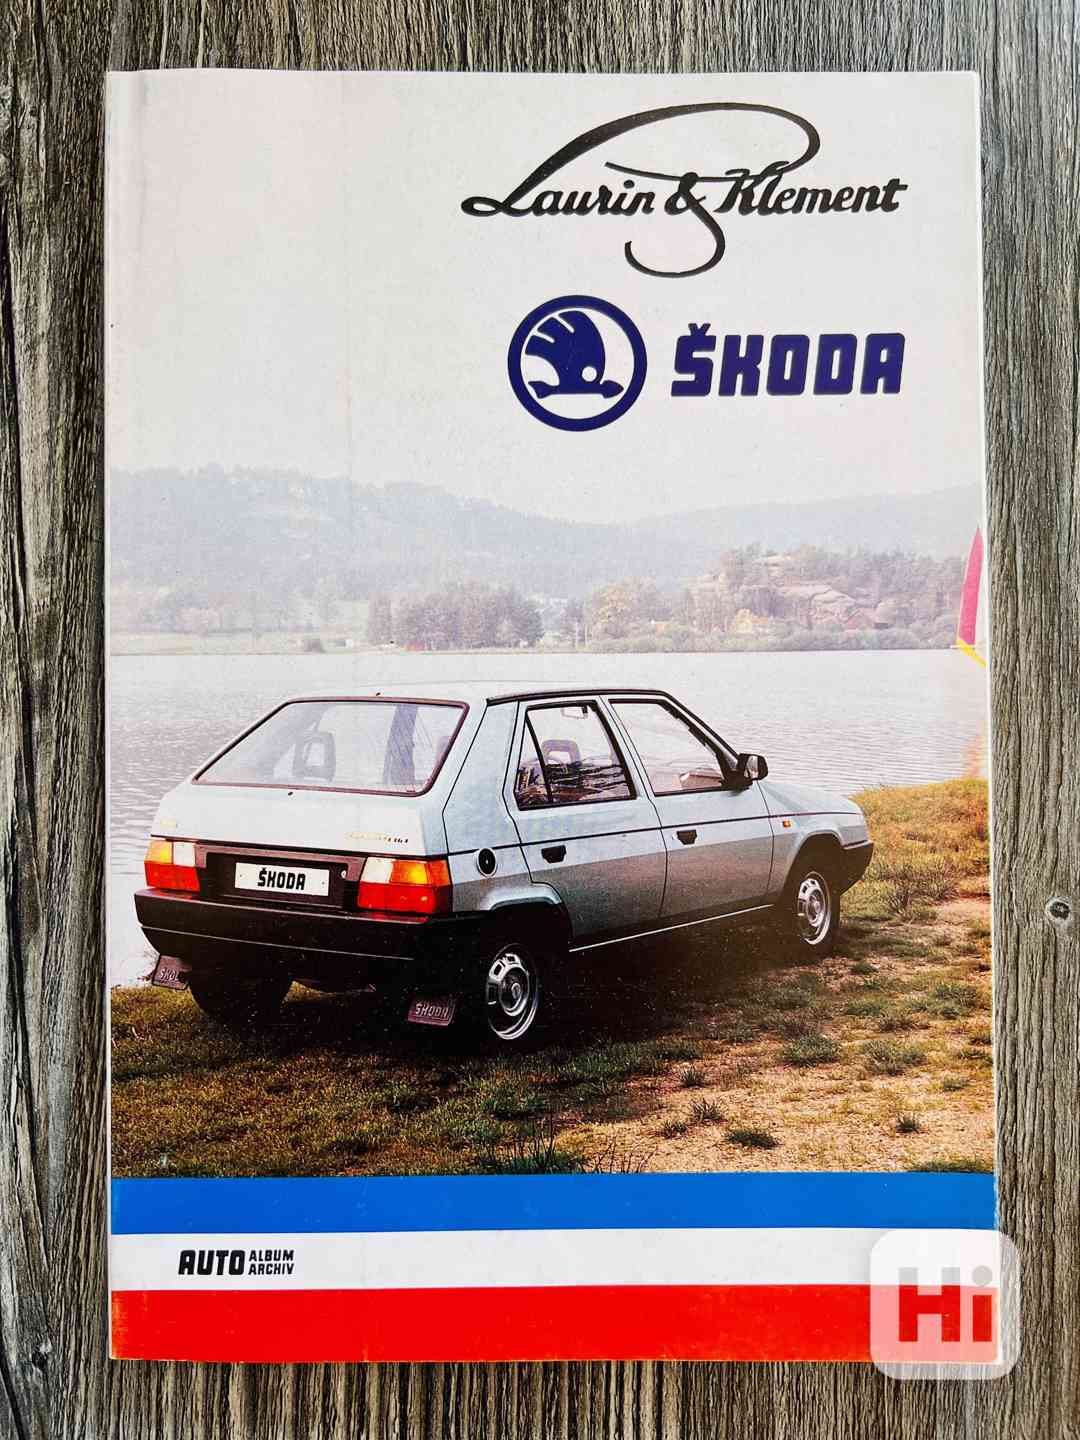 Auto Album Archiv - Laurin & Klement - Škoda 1993 - foto 1